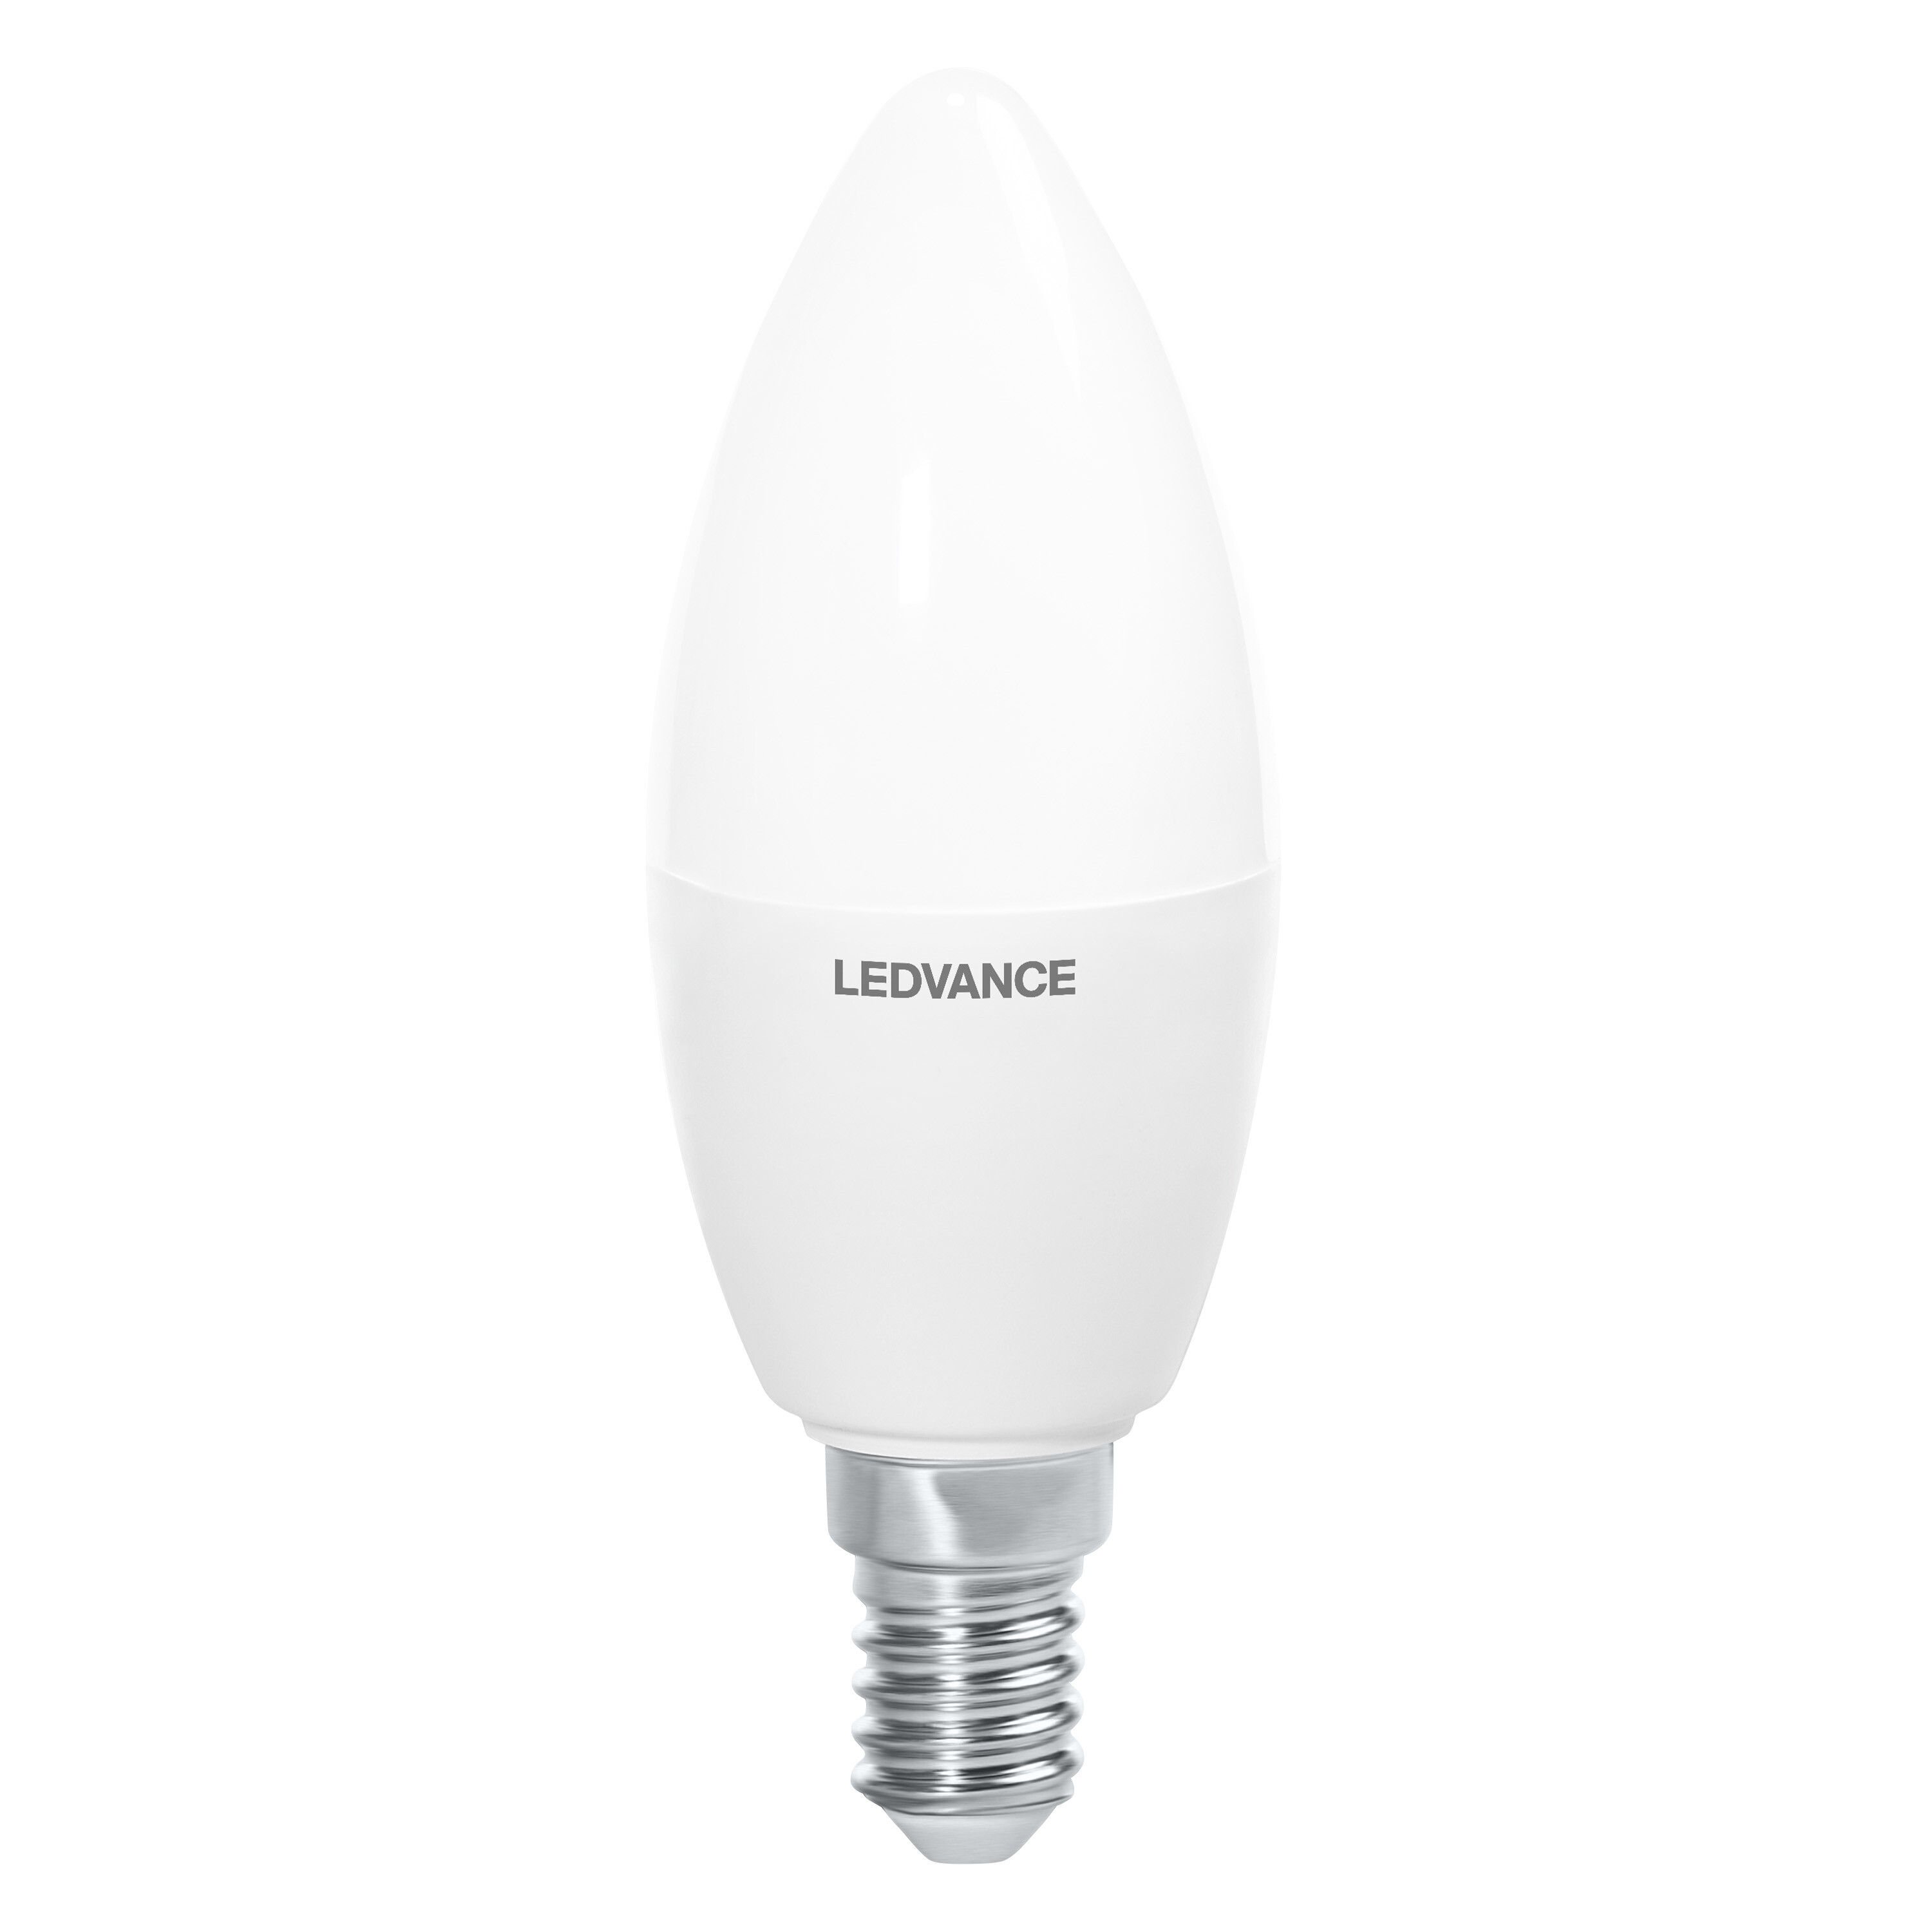 LEDVANCE SunHome Lamps LED änderbar Lampe 425 lumen Lichfarbe